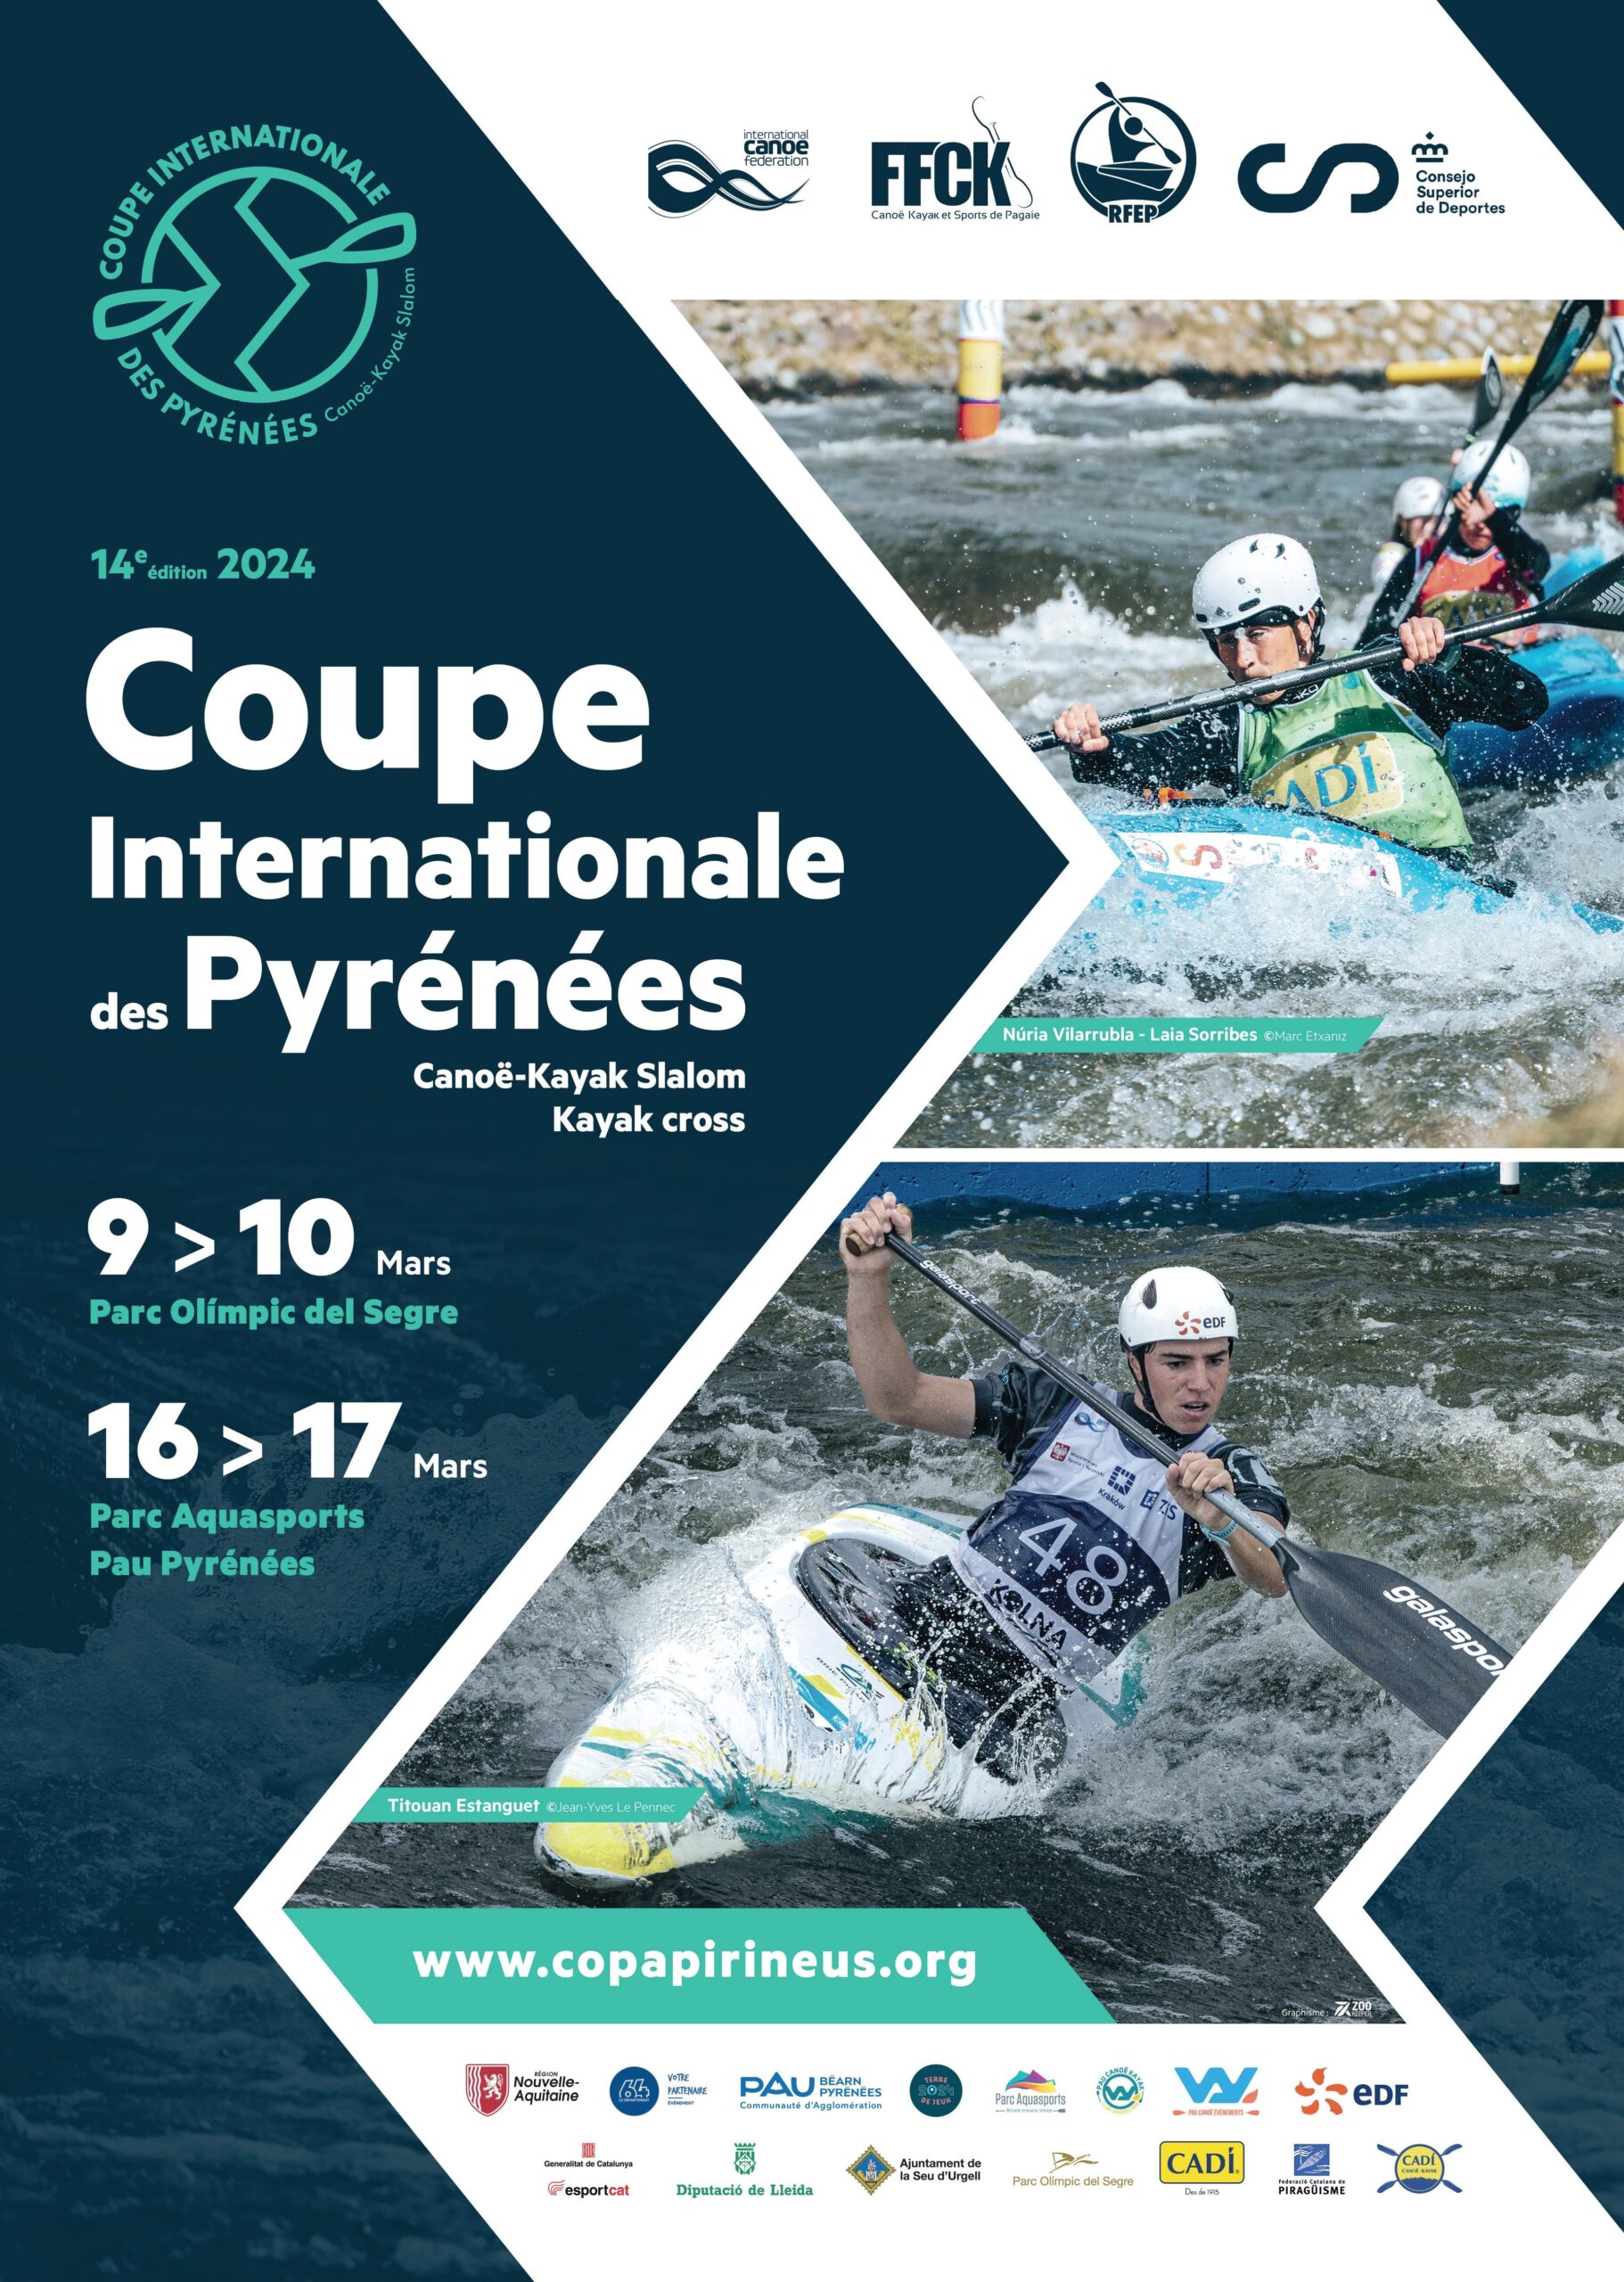 coupe internationale des pyrenees canoe kayak slalom pau pycup